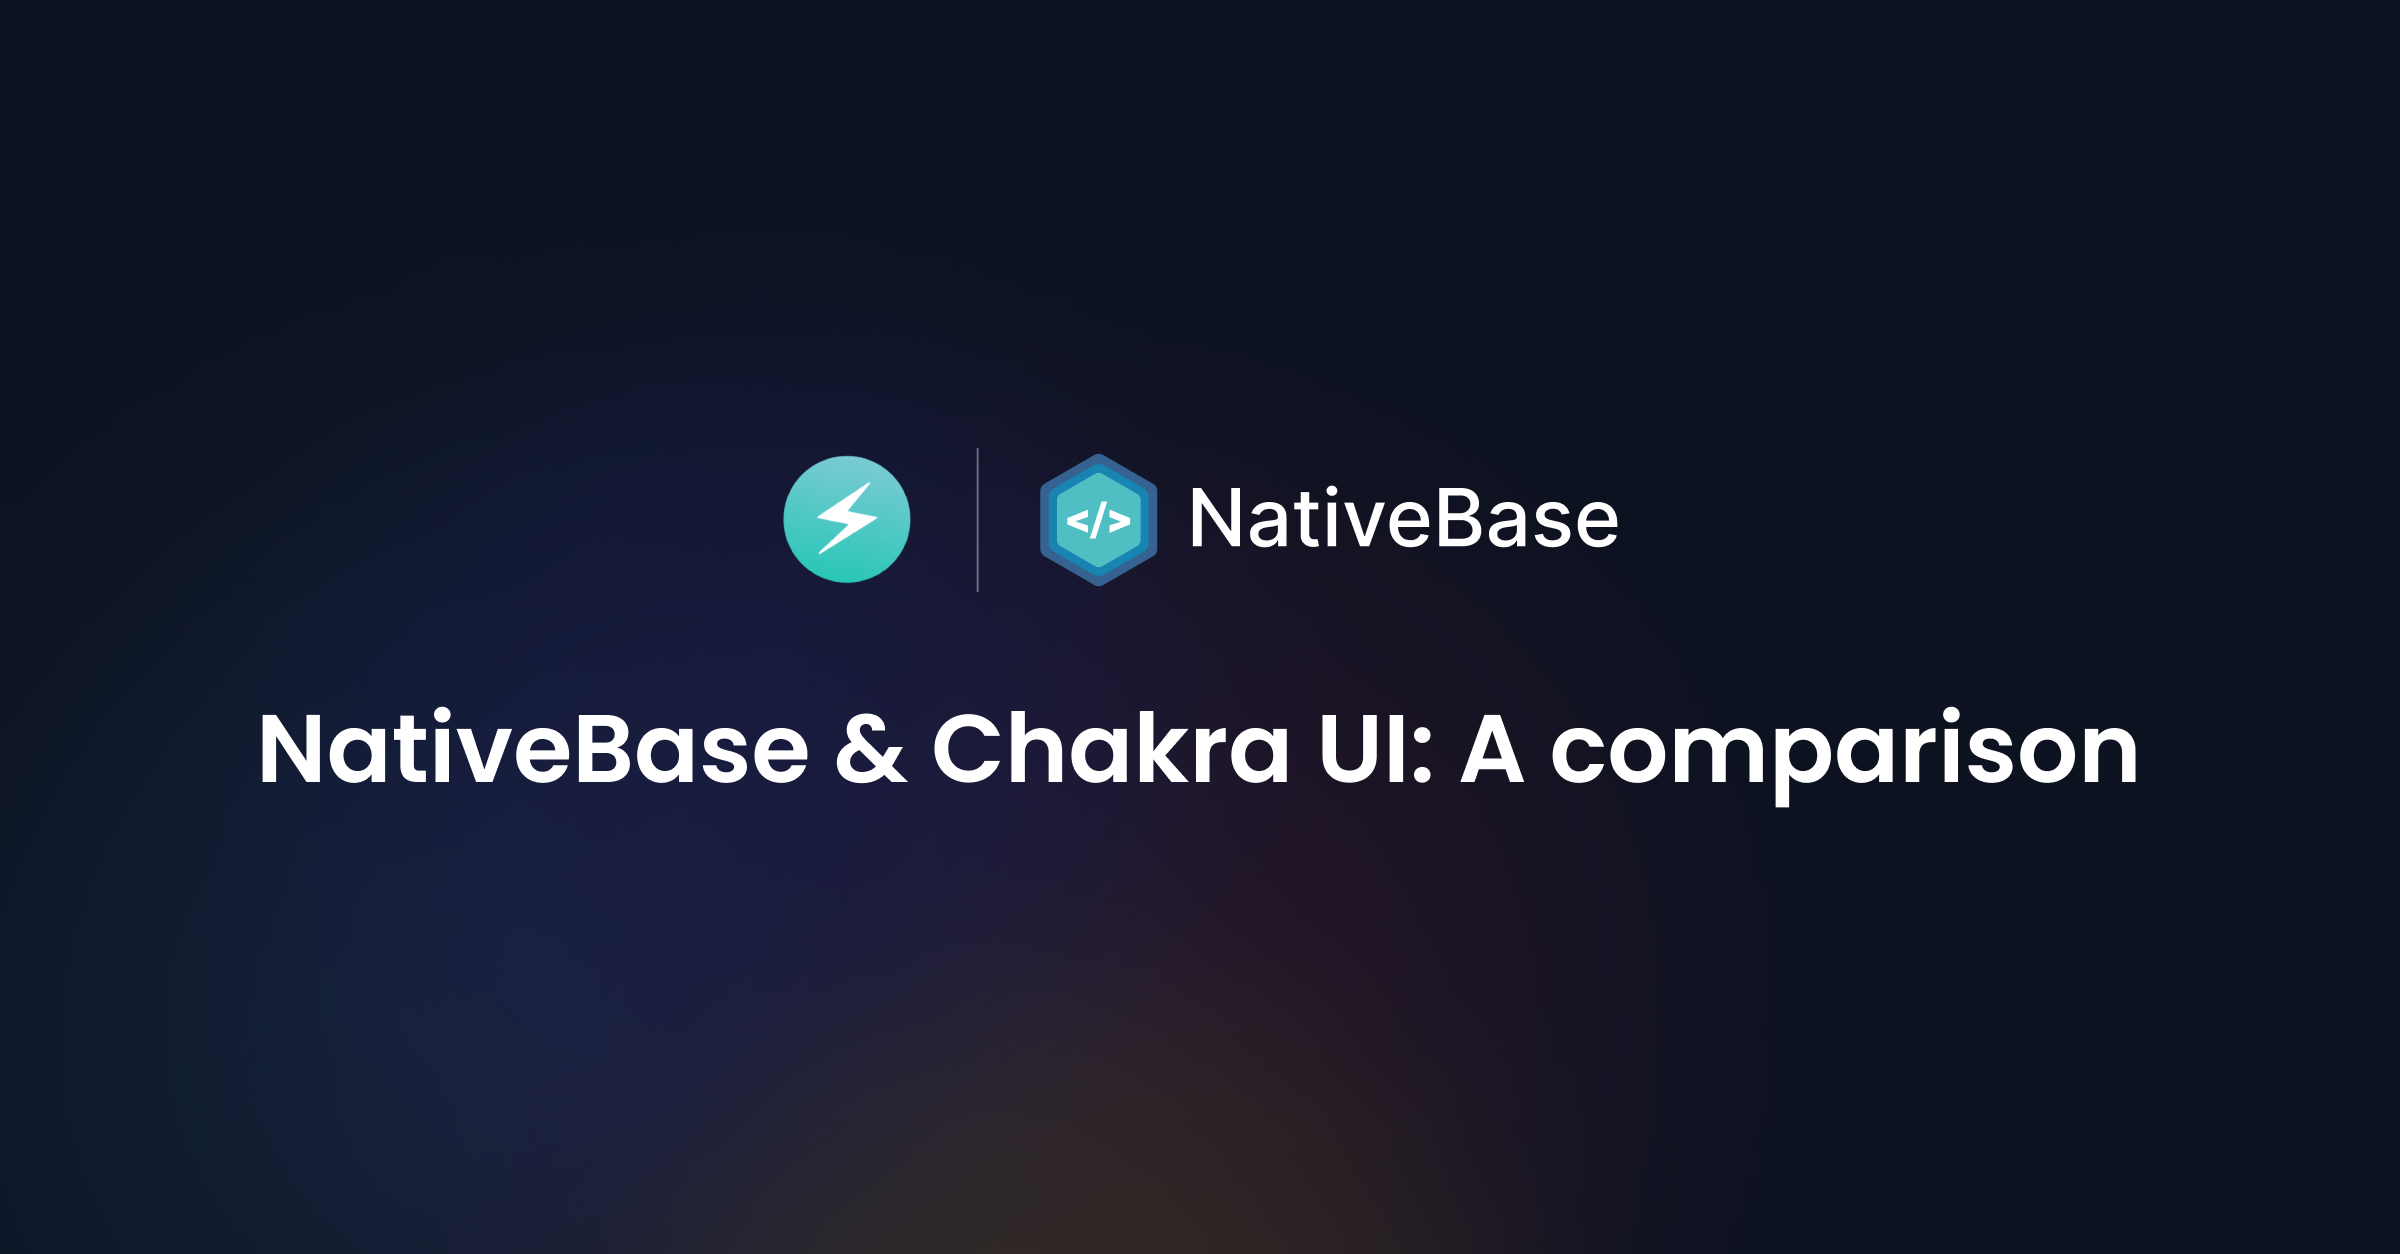 NativeBase Vs Chakra UI: A comparison